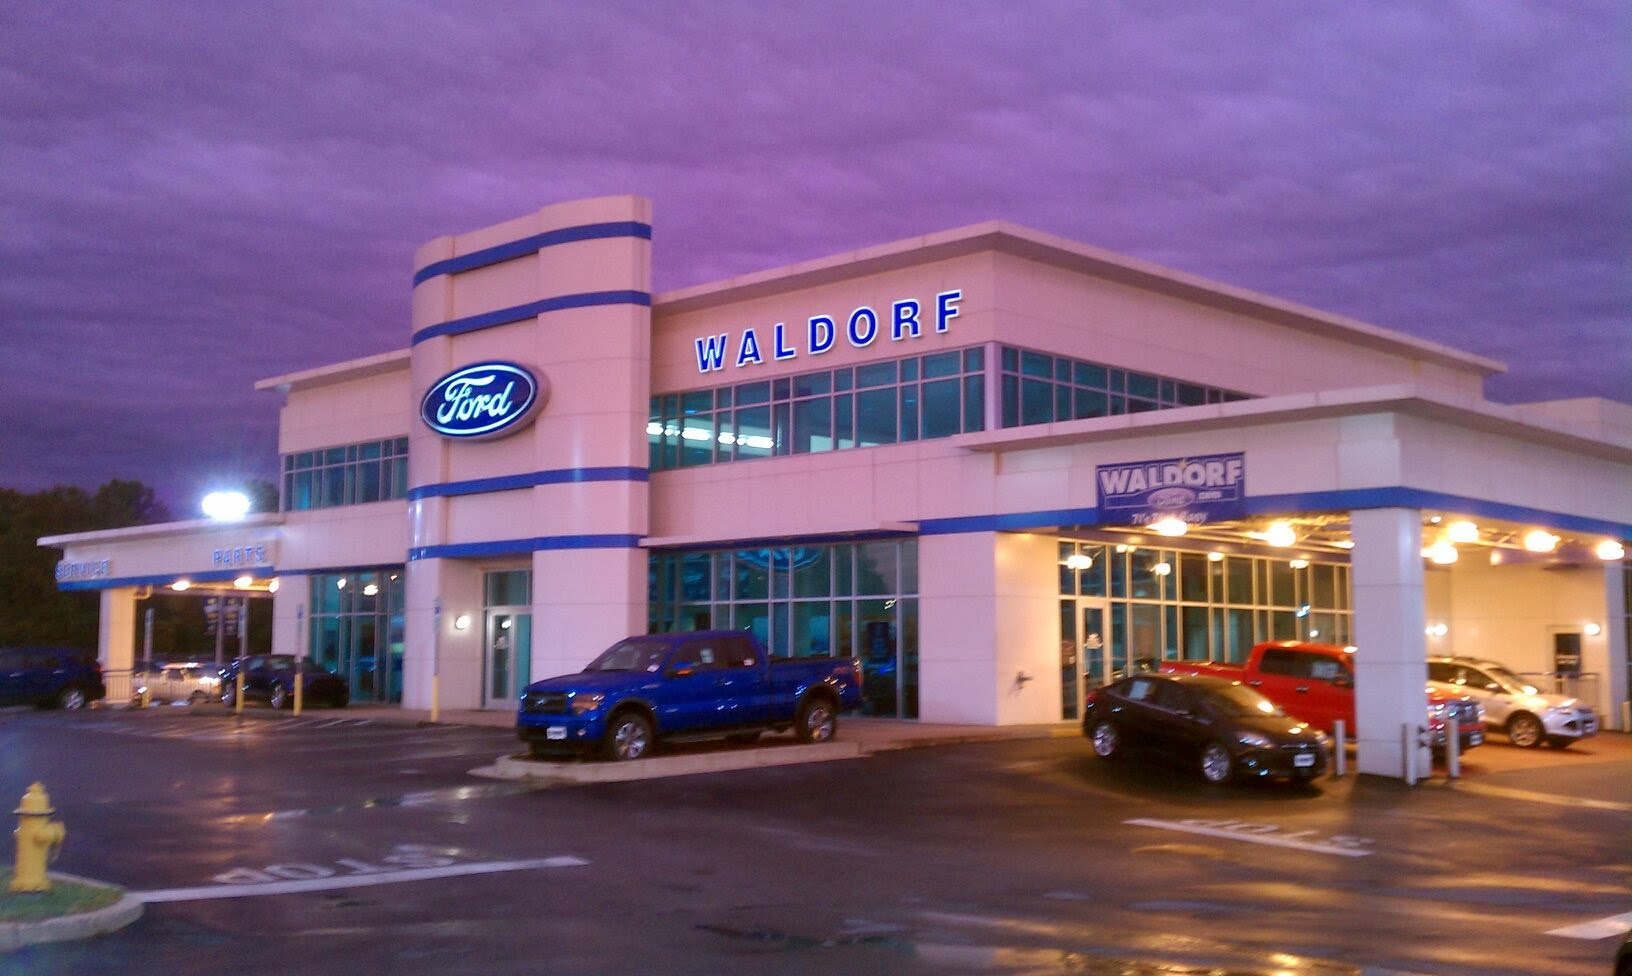 Waldorf Ford